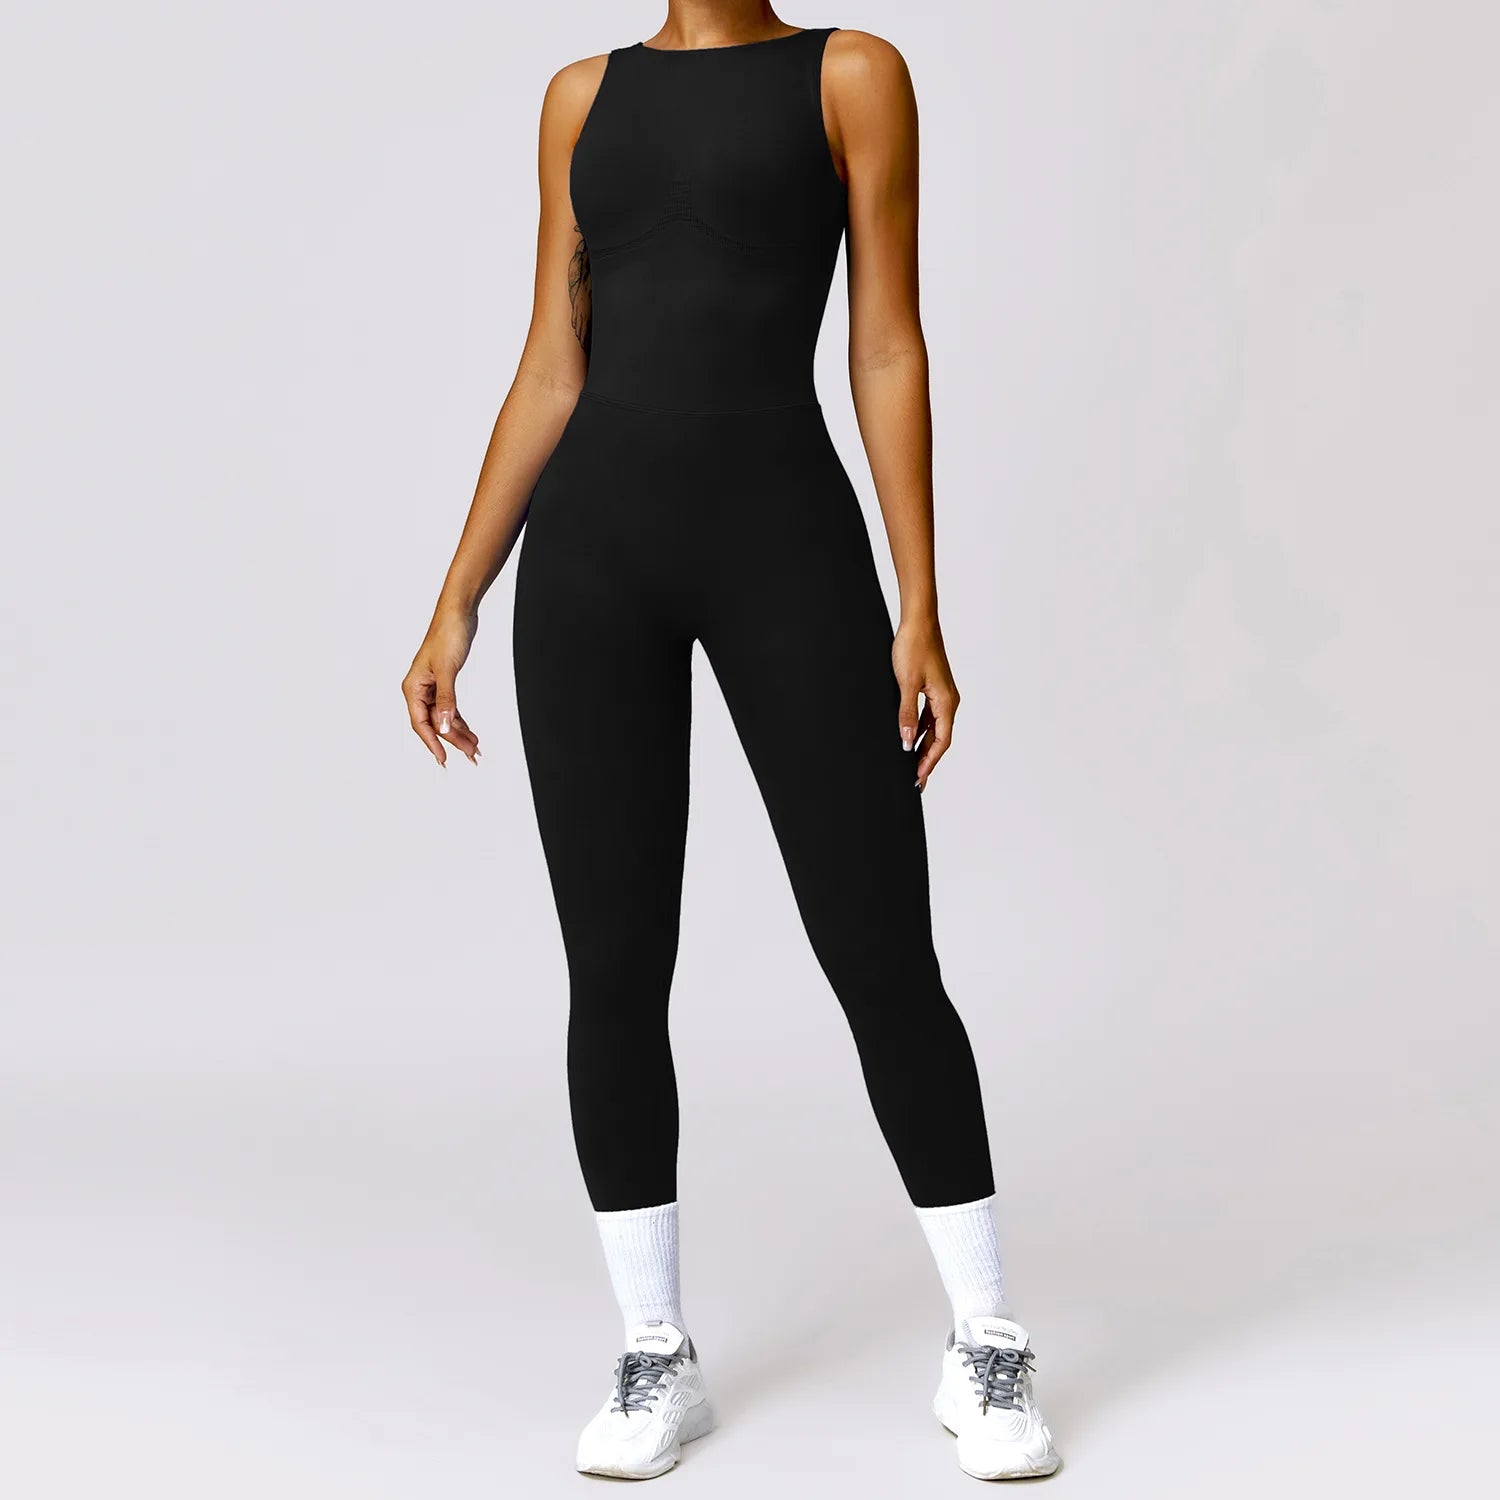 FlexiStretch Seamless Yoga Sleeveless Leggings Jumpsuit-Modern Active